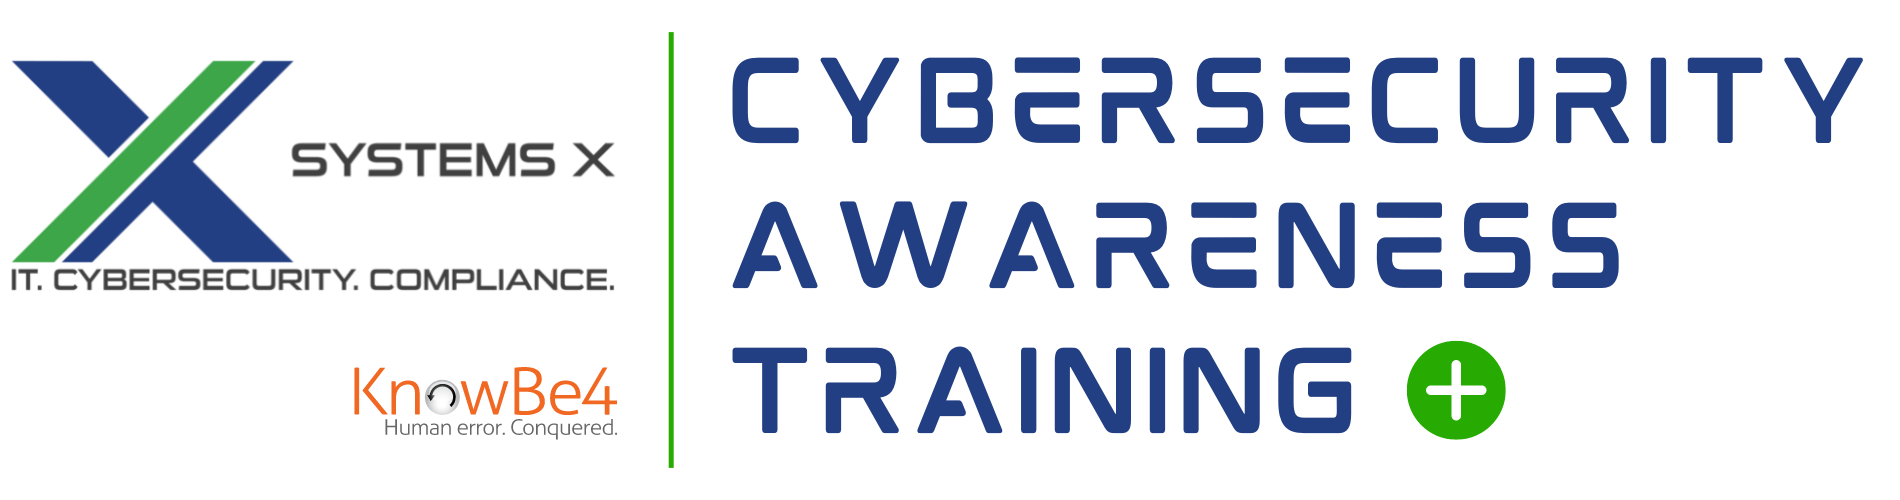 Cybersecurity Awareness Training v.1